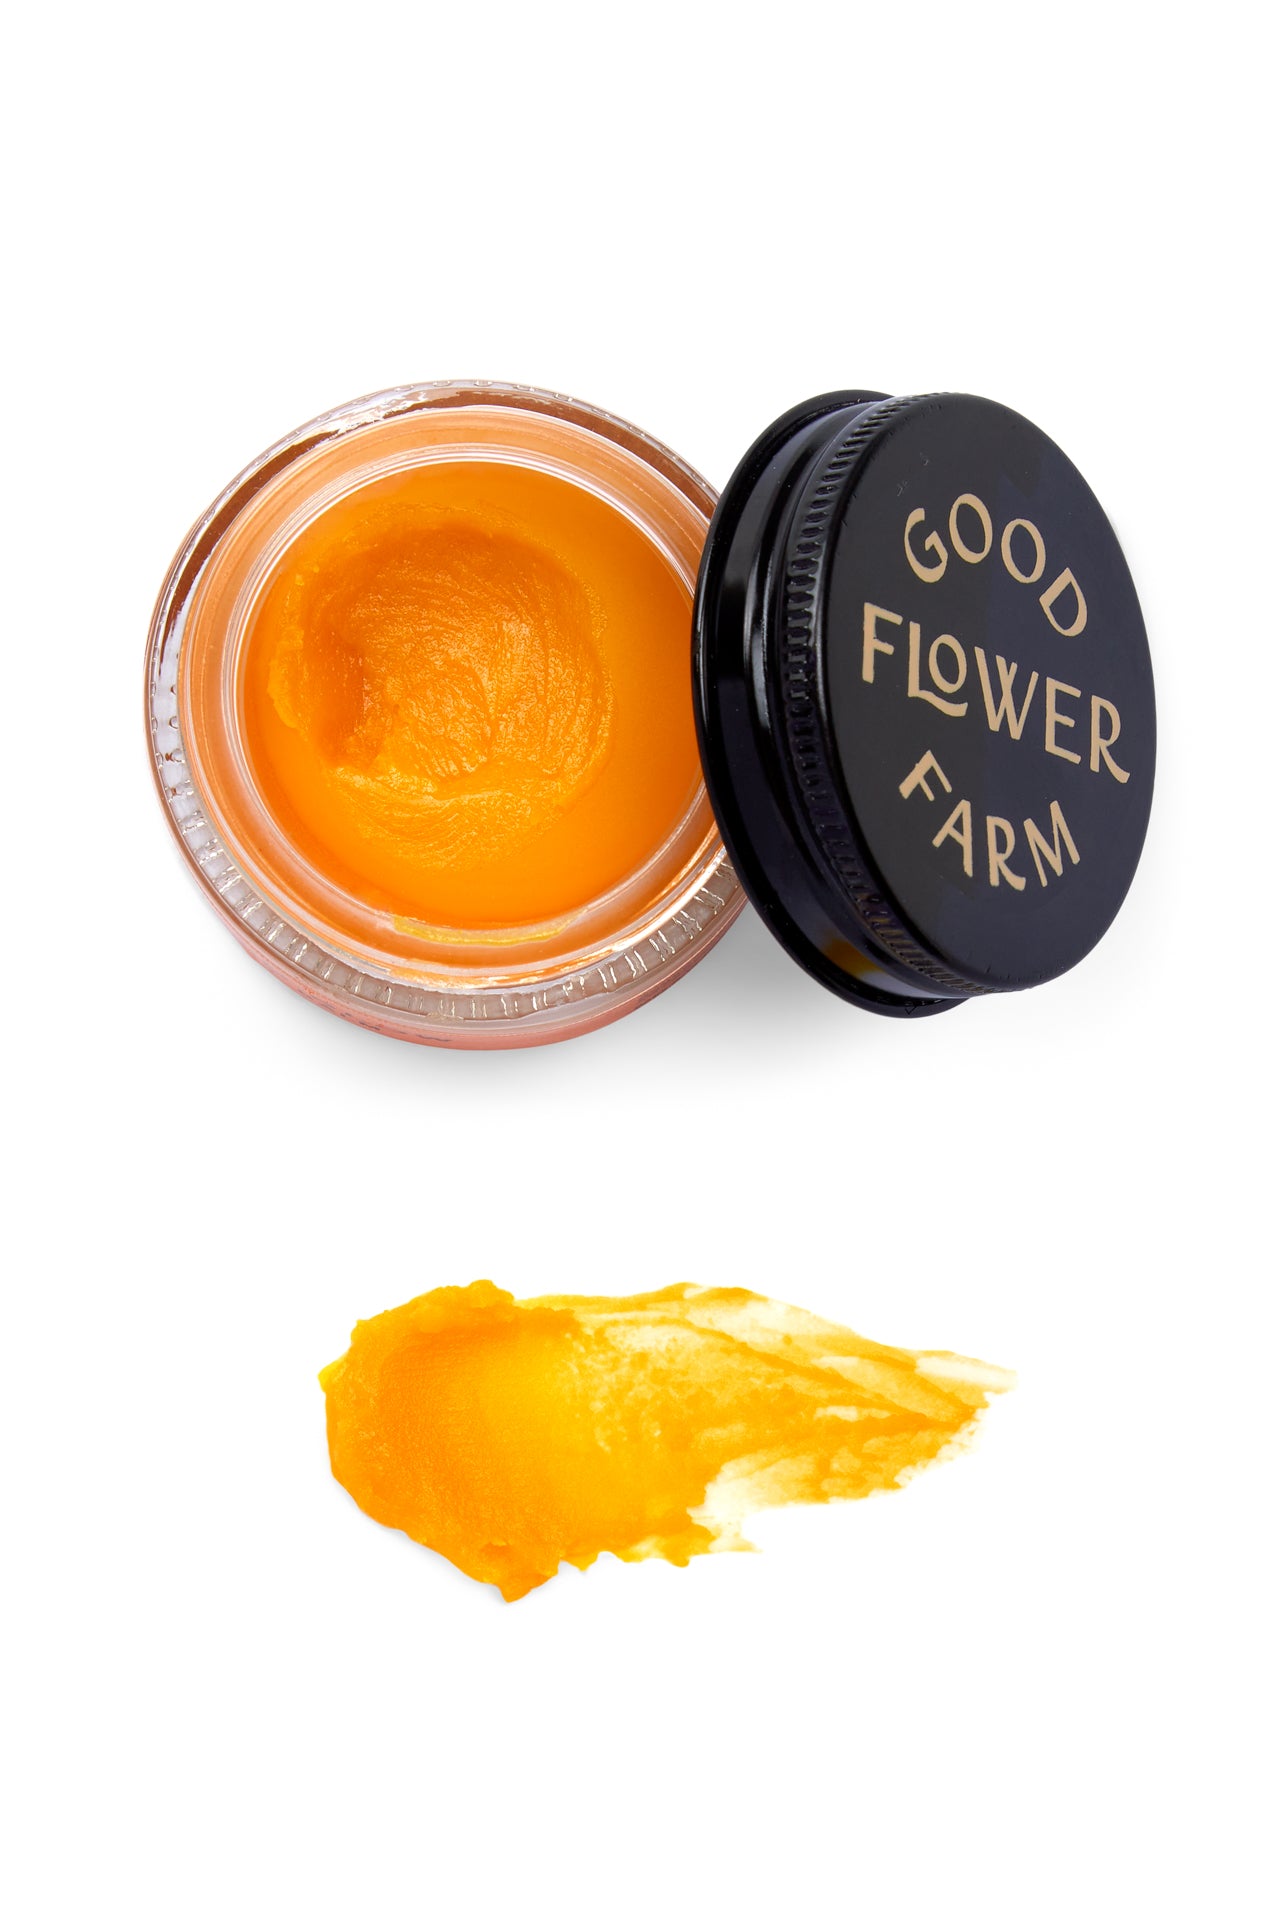 Golden Glow Beauty Balm by Good Flower Farm - rich nourishing facial repair balm